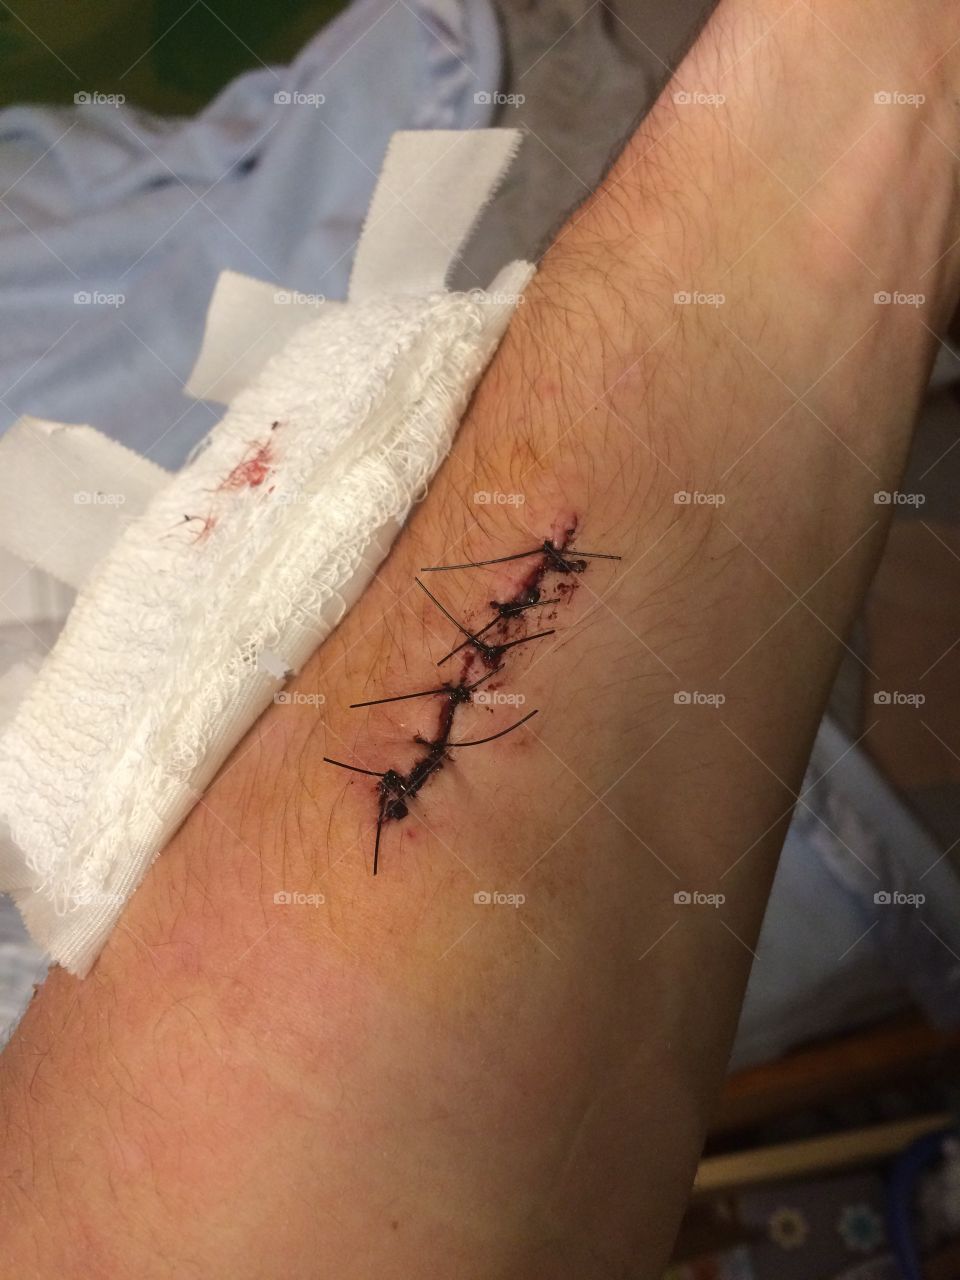 Stitches in arm